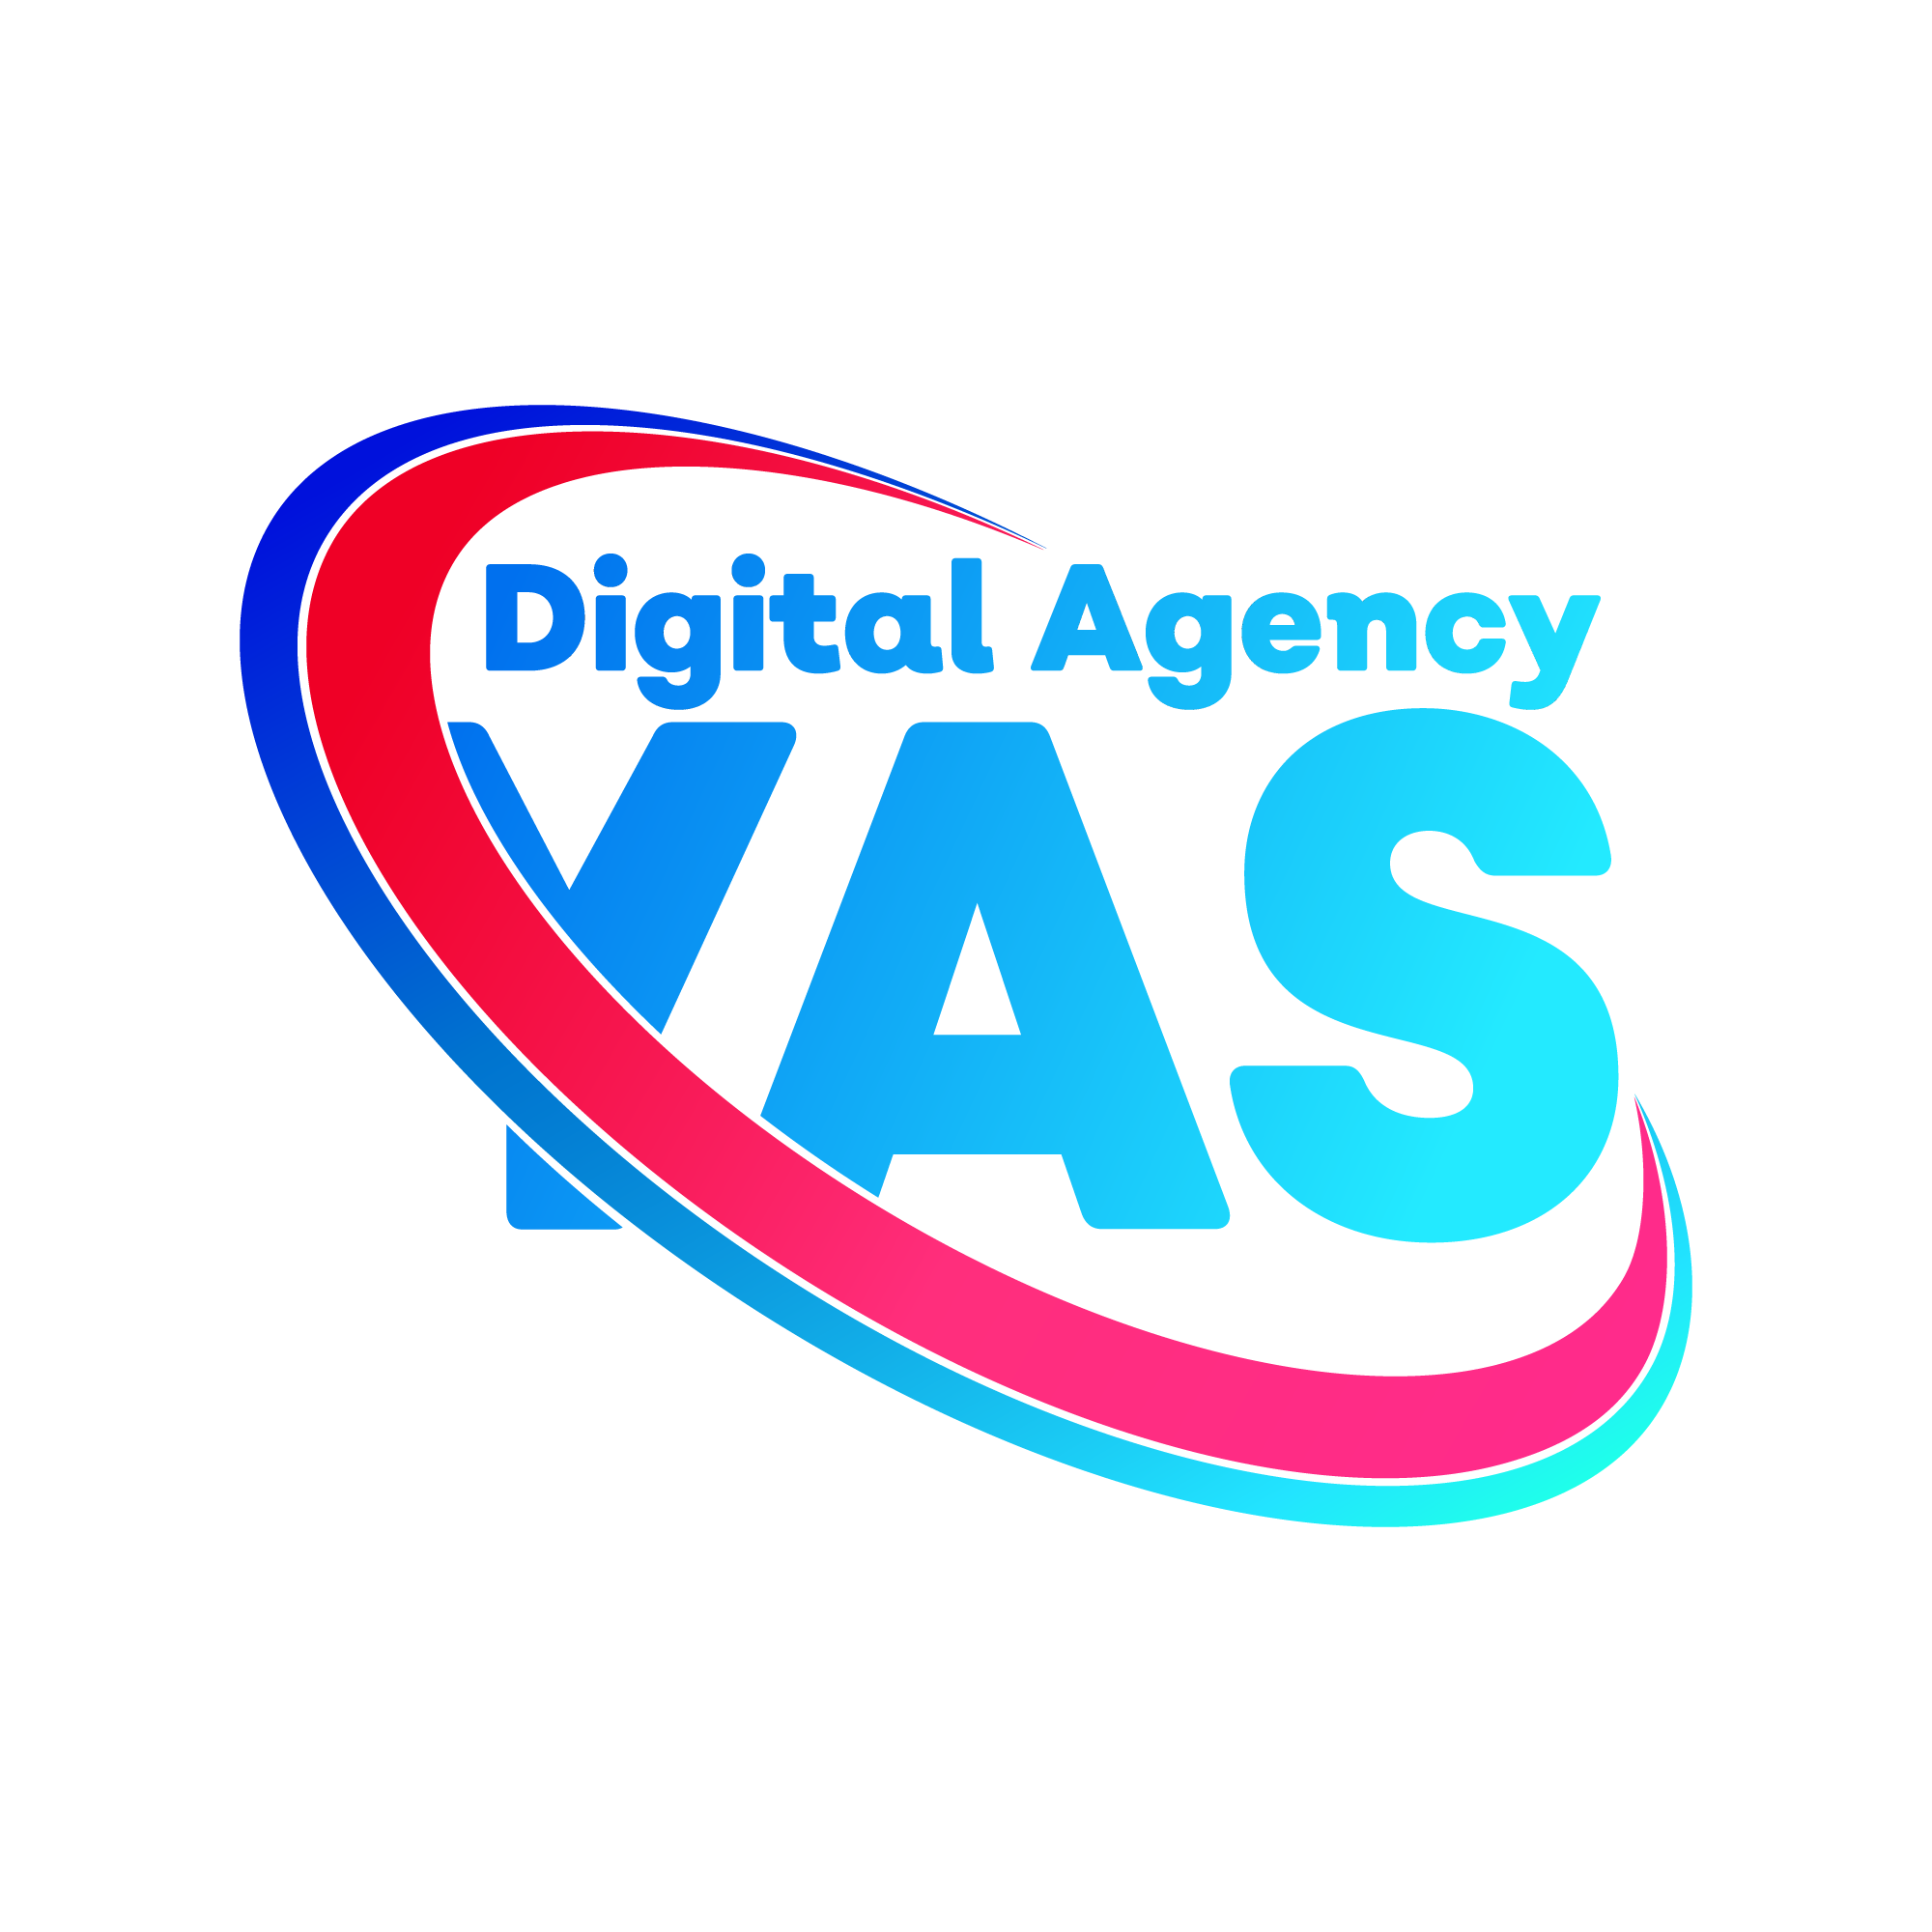 YAS Digital Agency Logo1.png